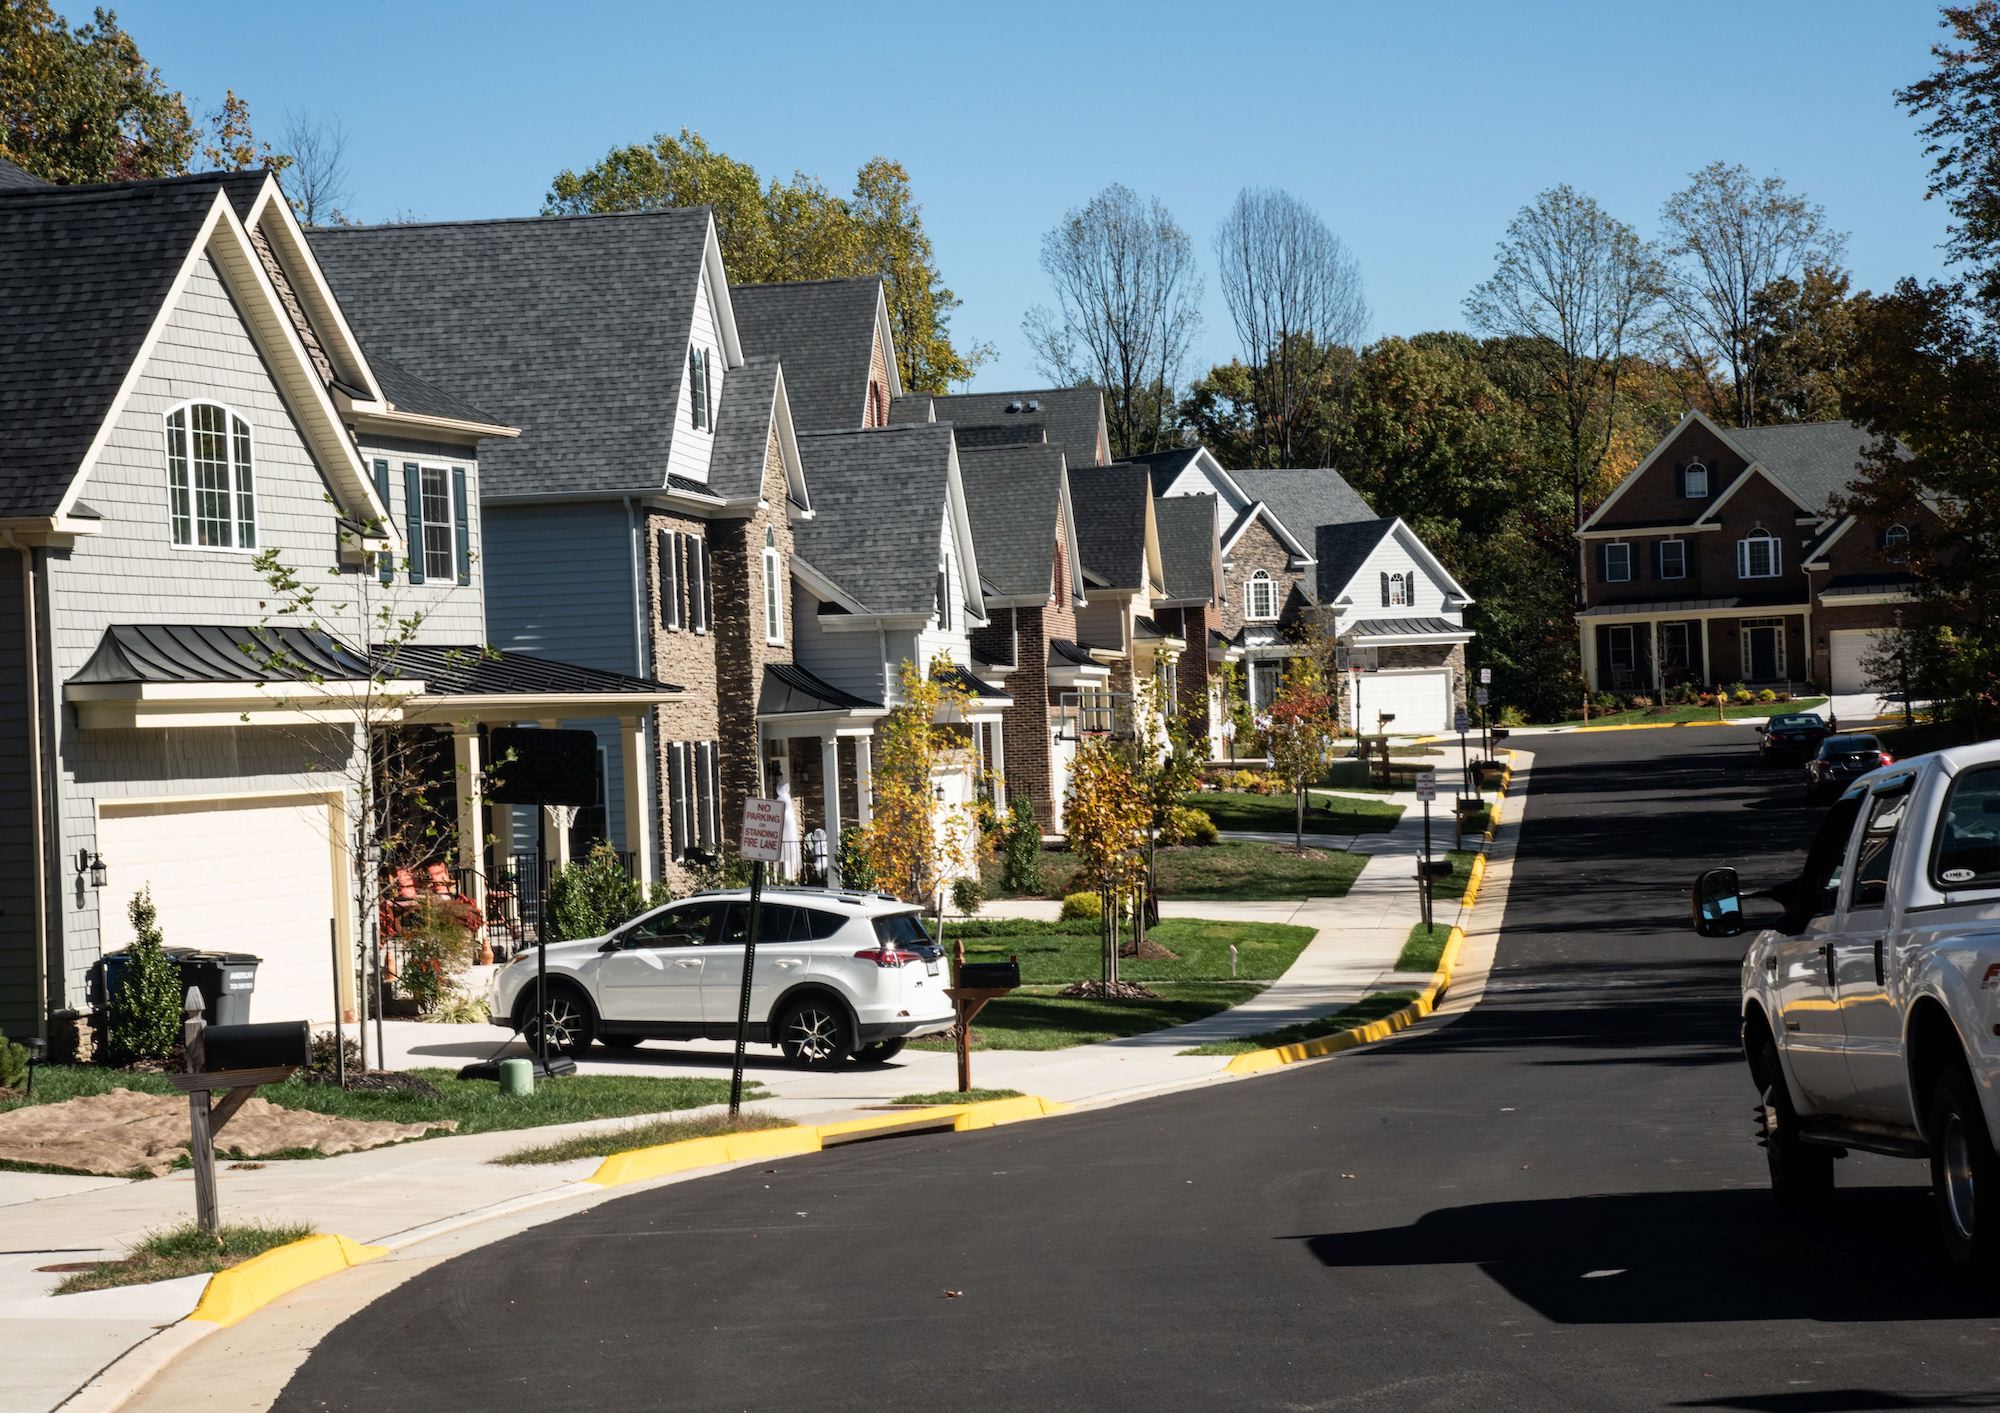 Neat line of suburban houses in Fairfax, Virginia